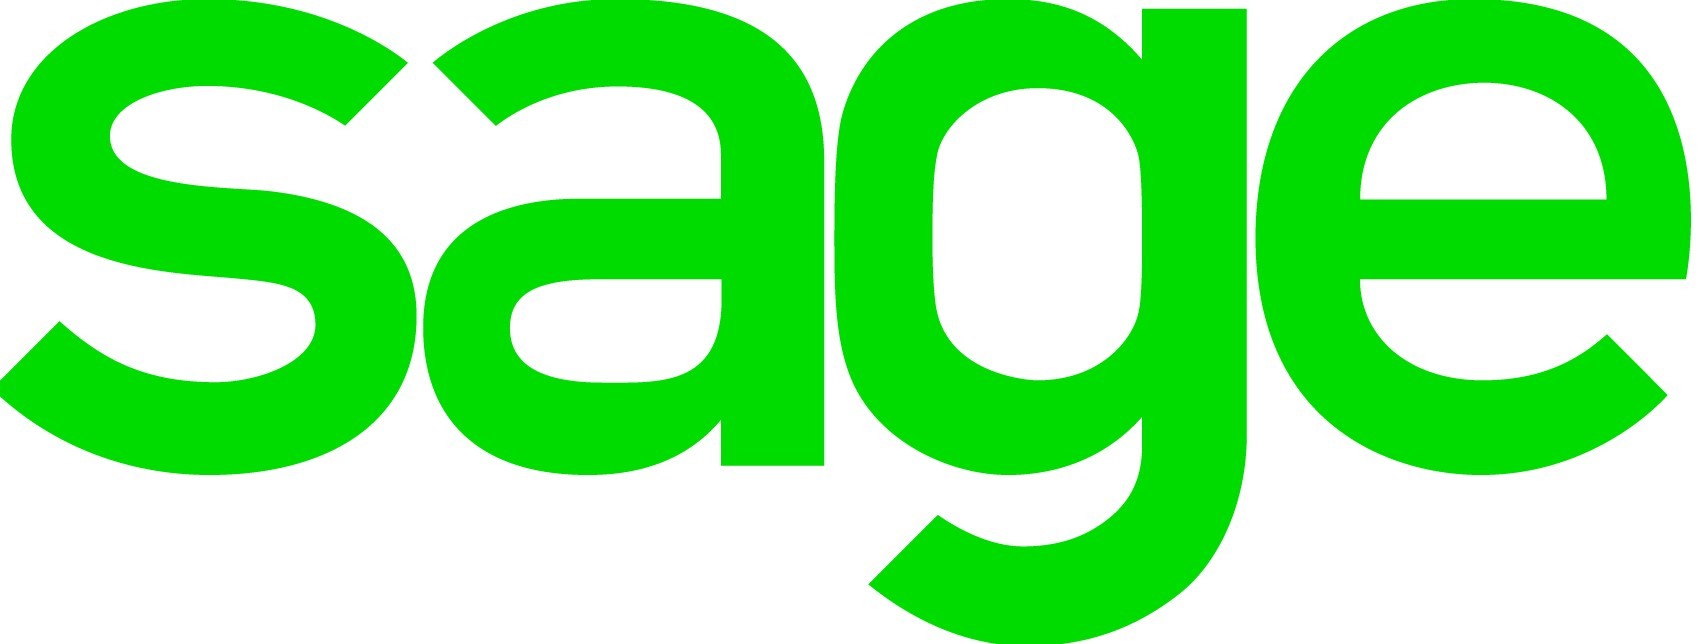 Sage_logo_bright_green